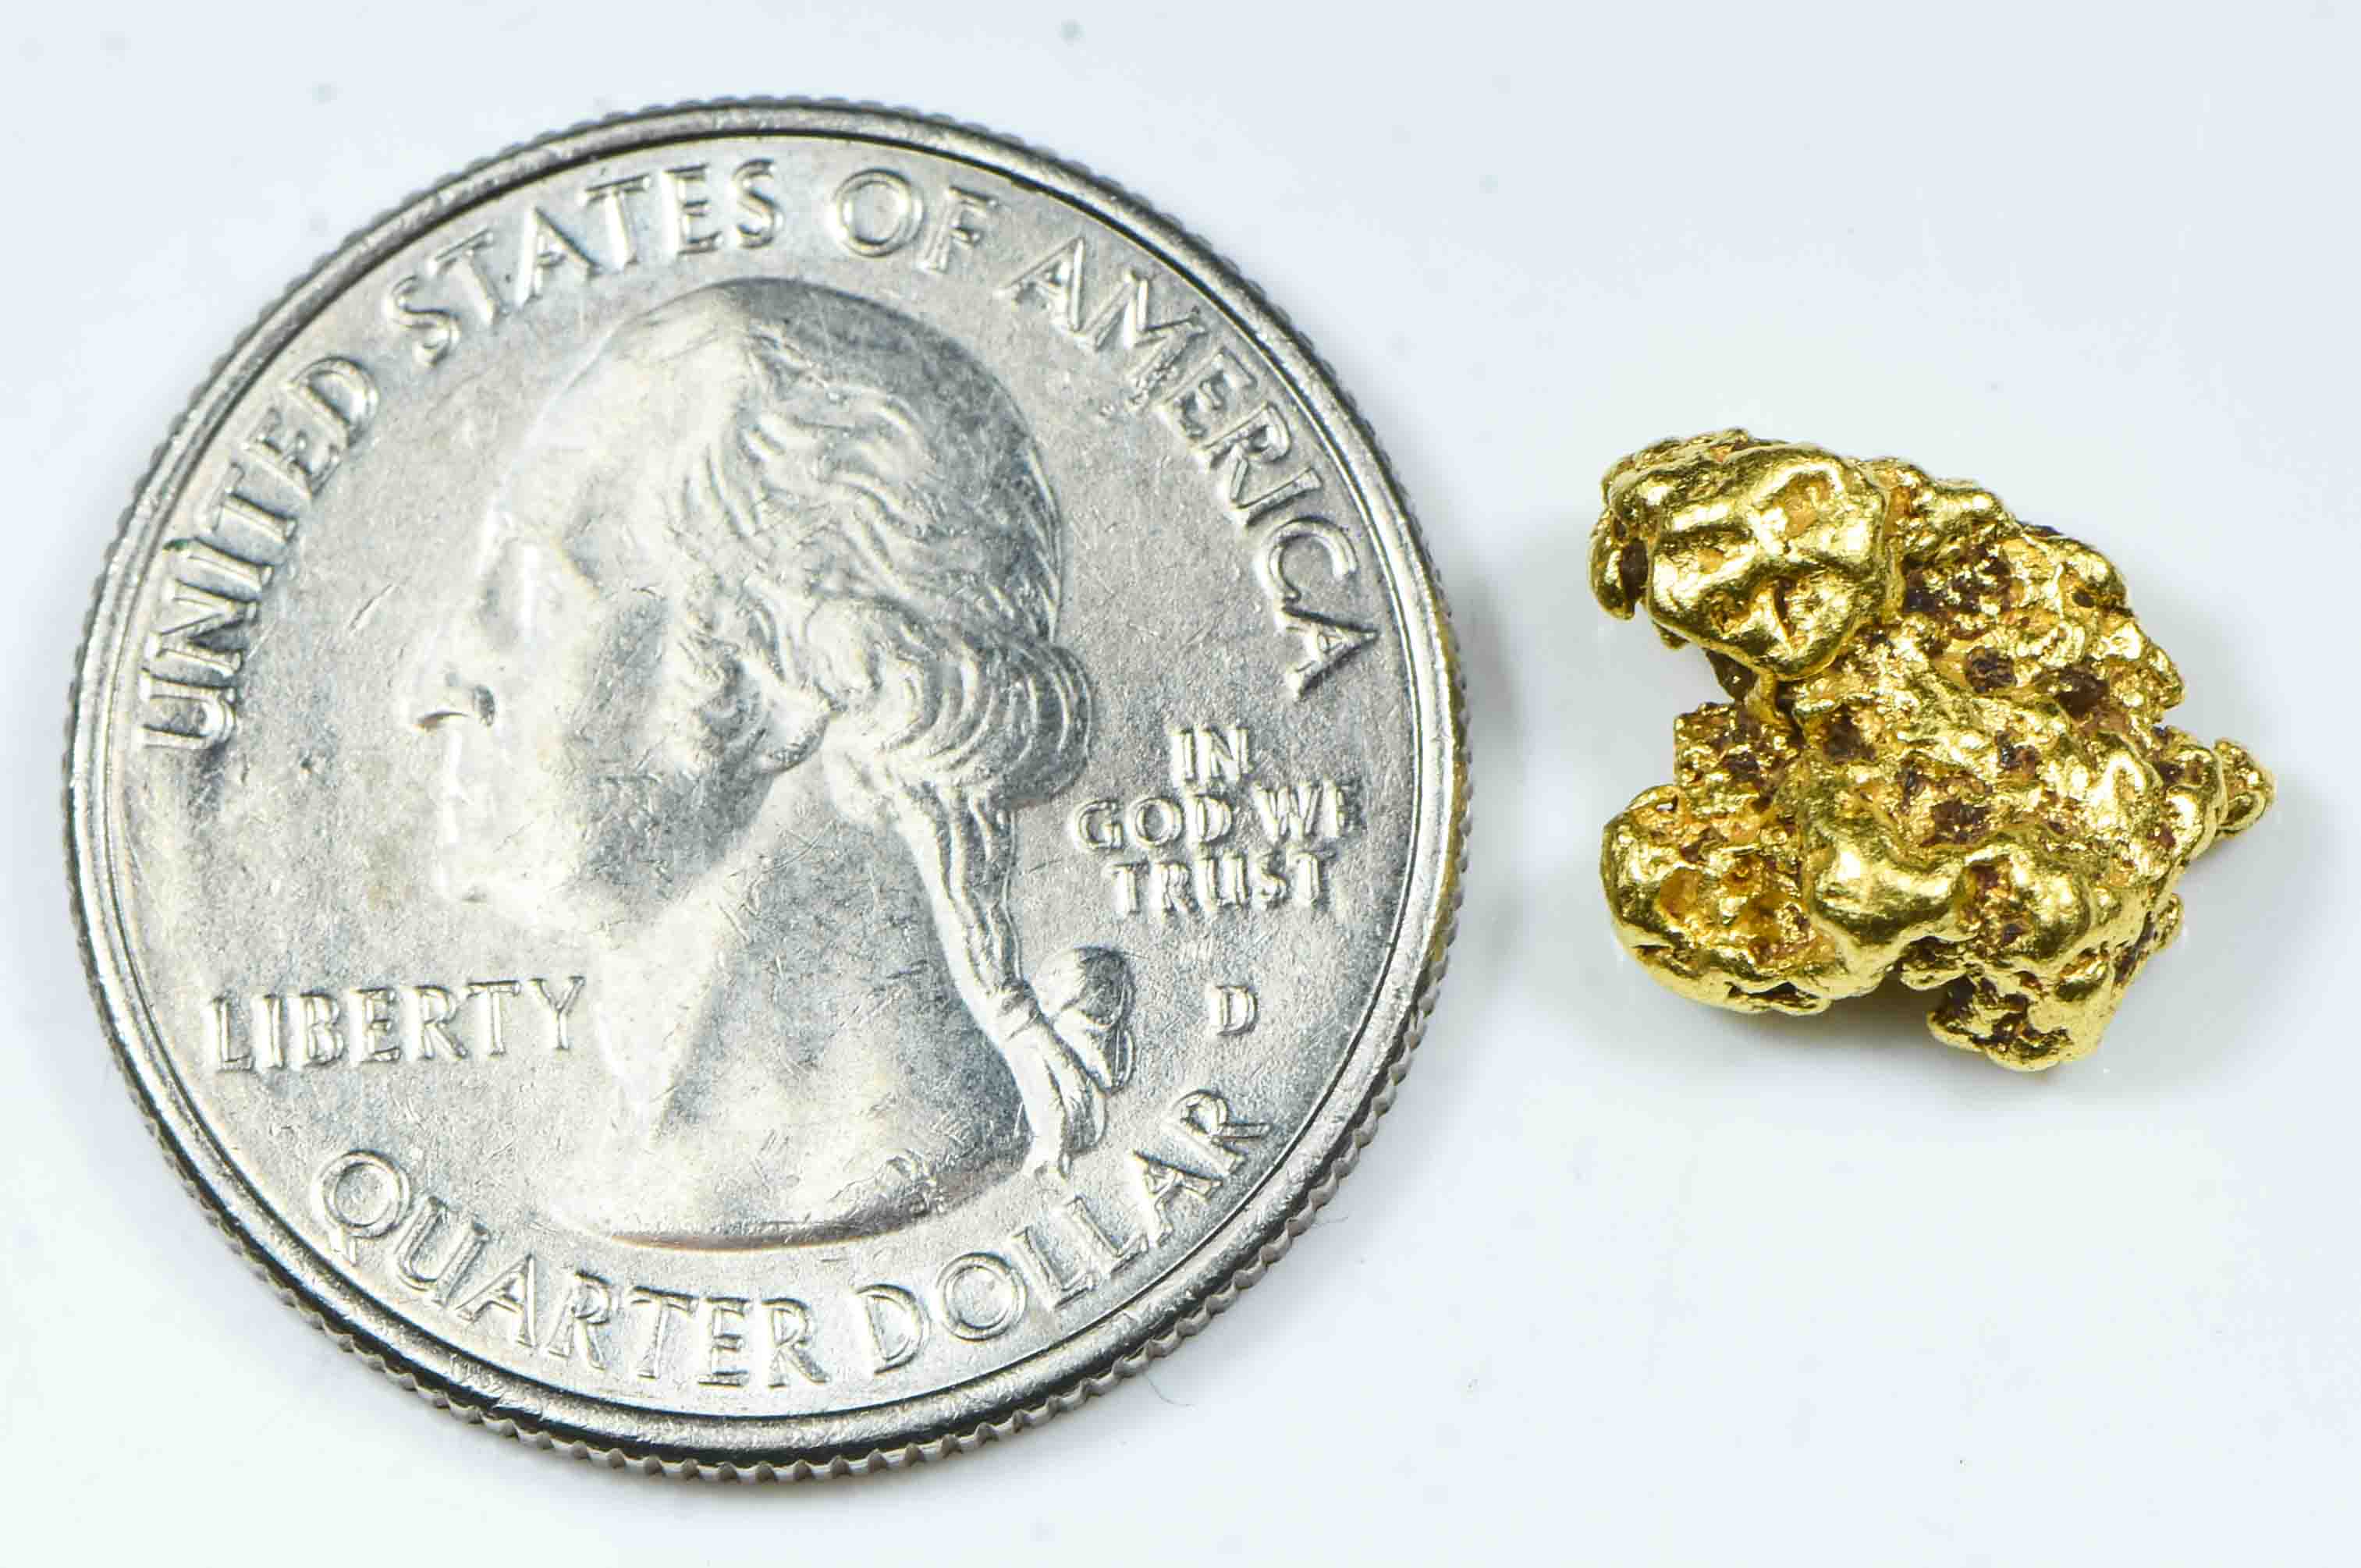 #34 Natural Gold Nugget Montana 3.09 Grams Genuine